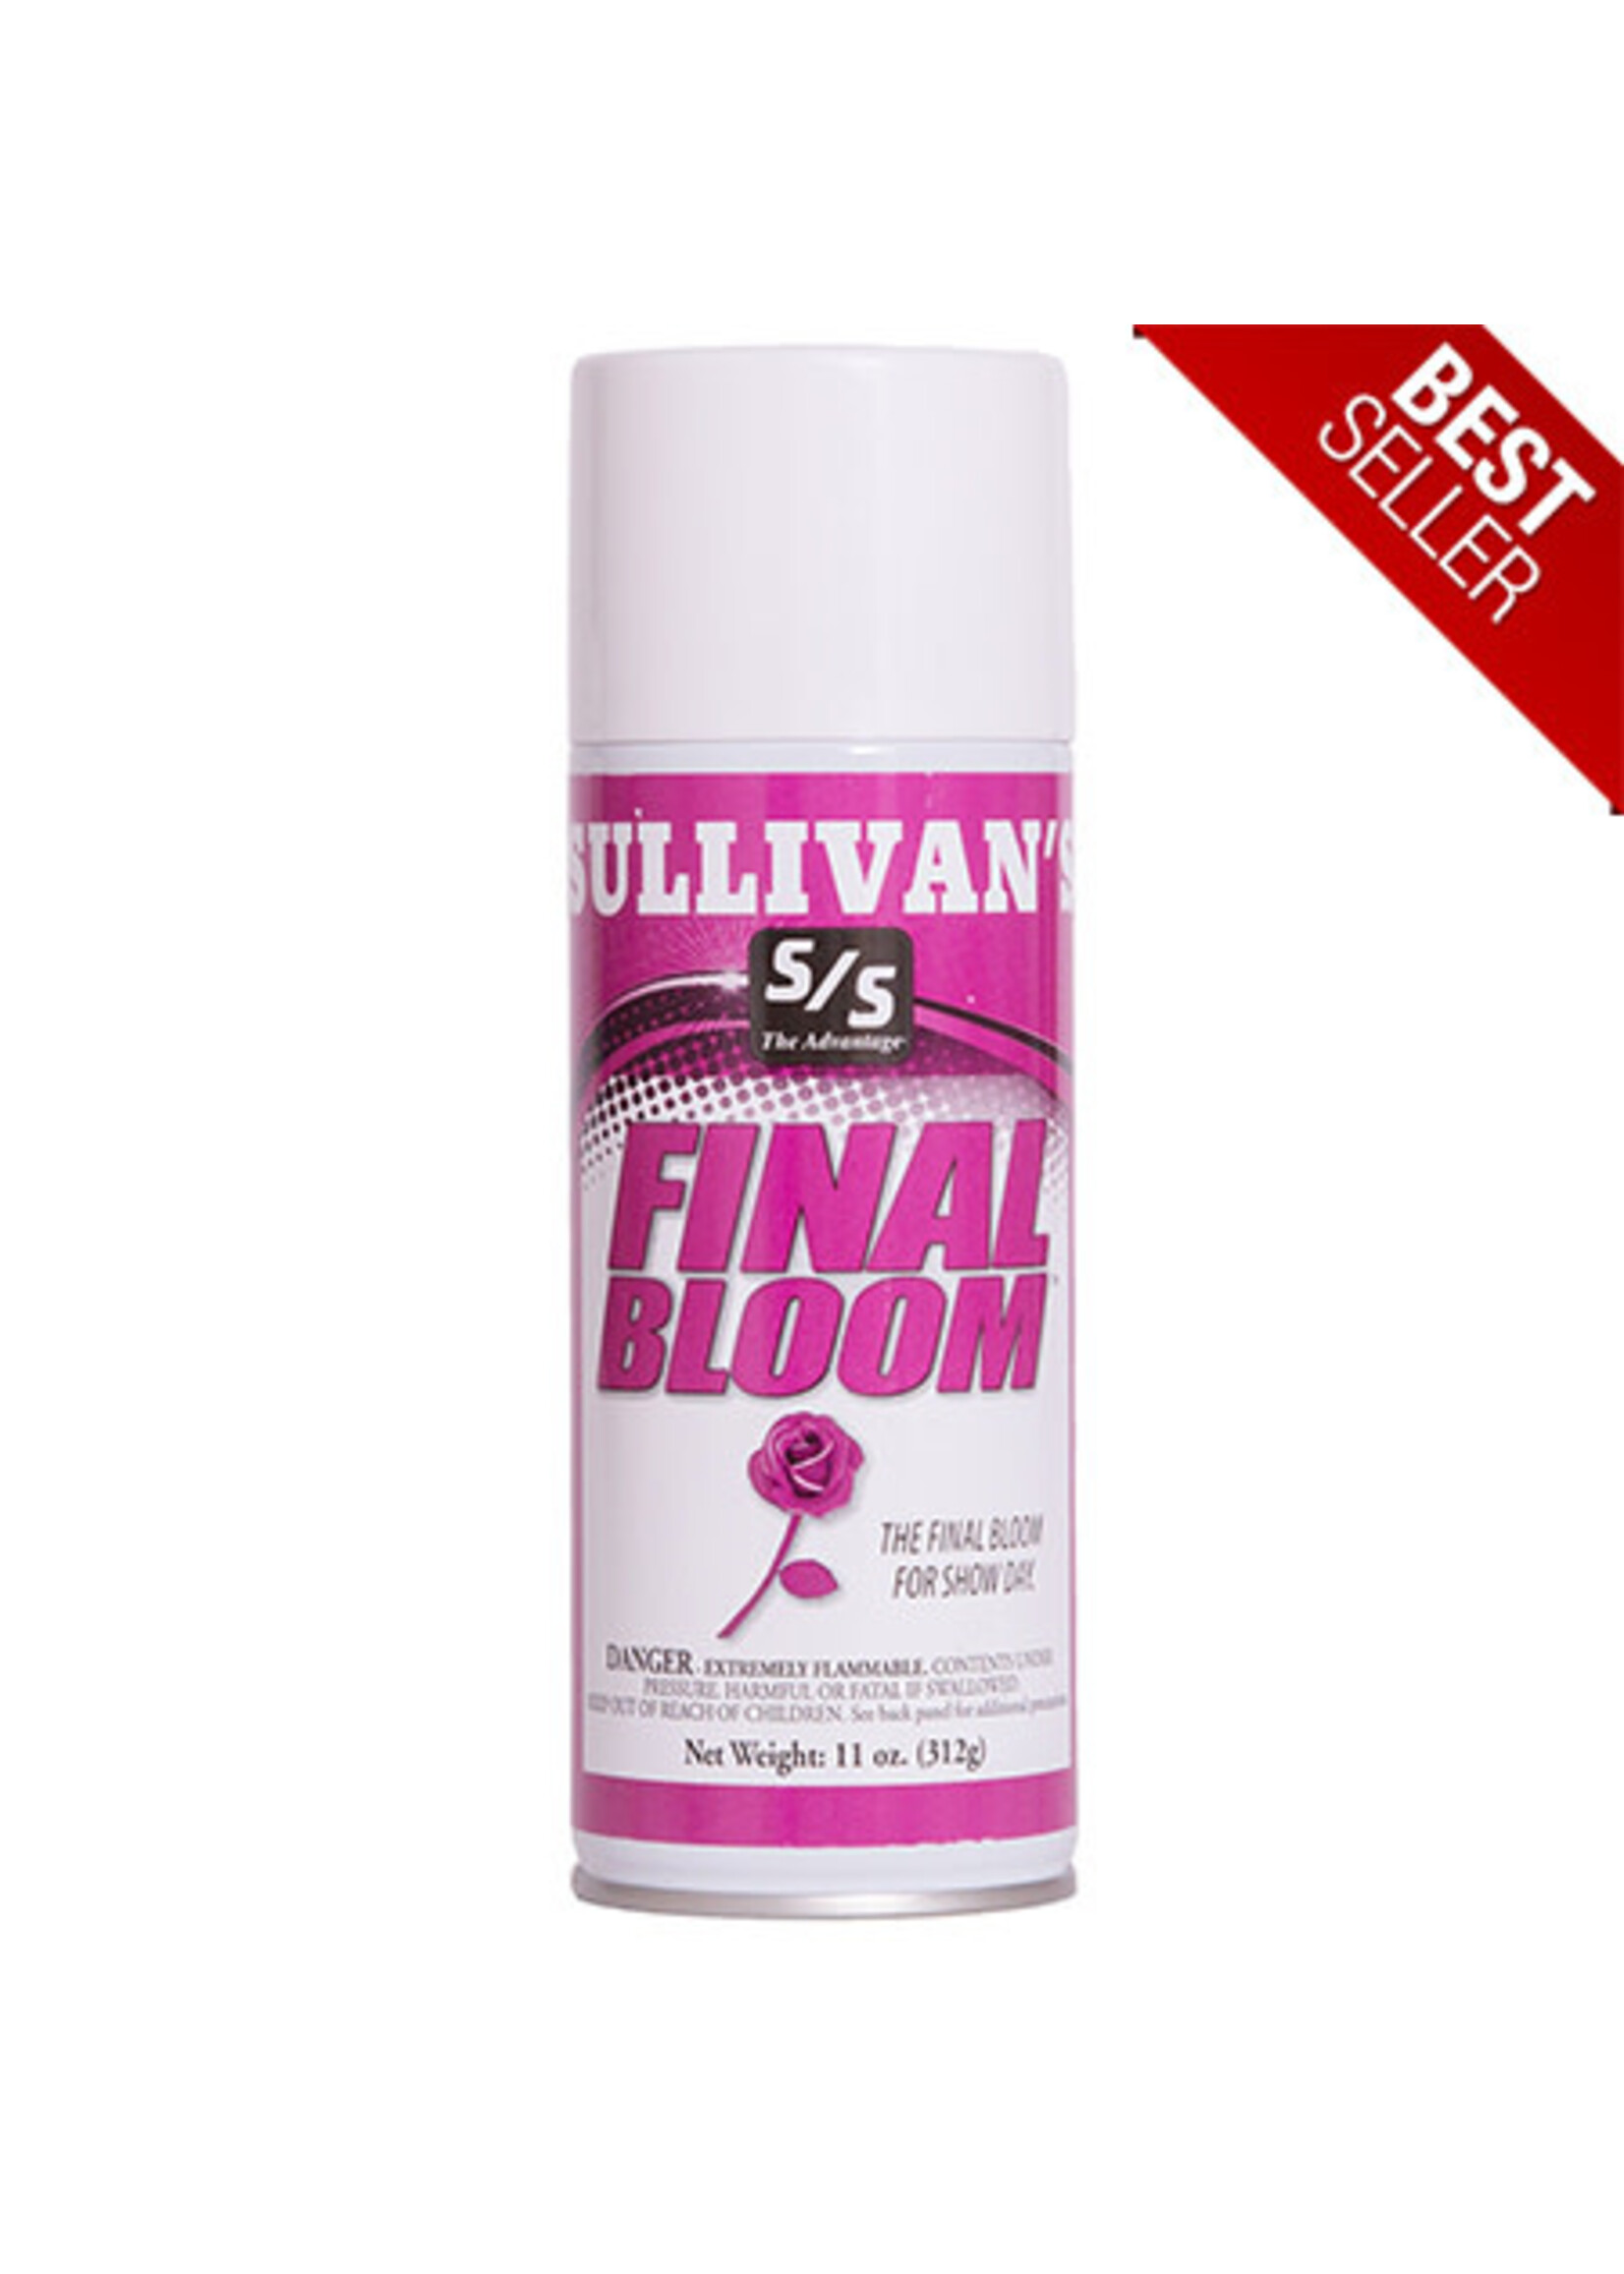 Sullivan Supply Sullivans Final Bloom 11oz